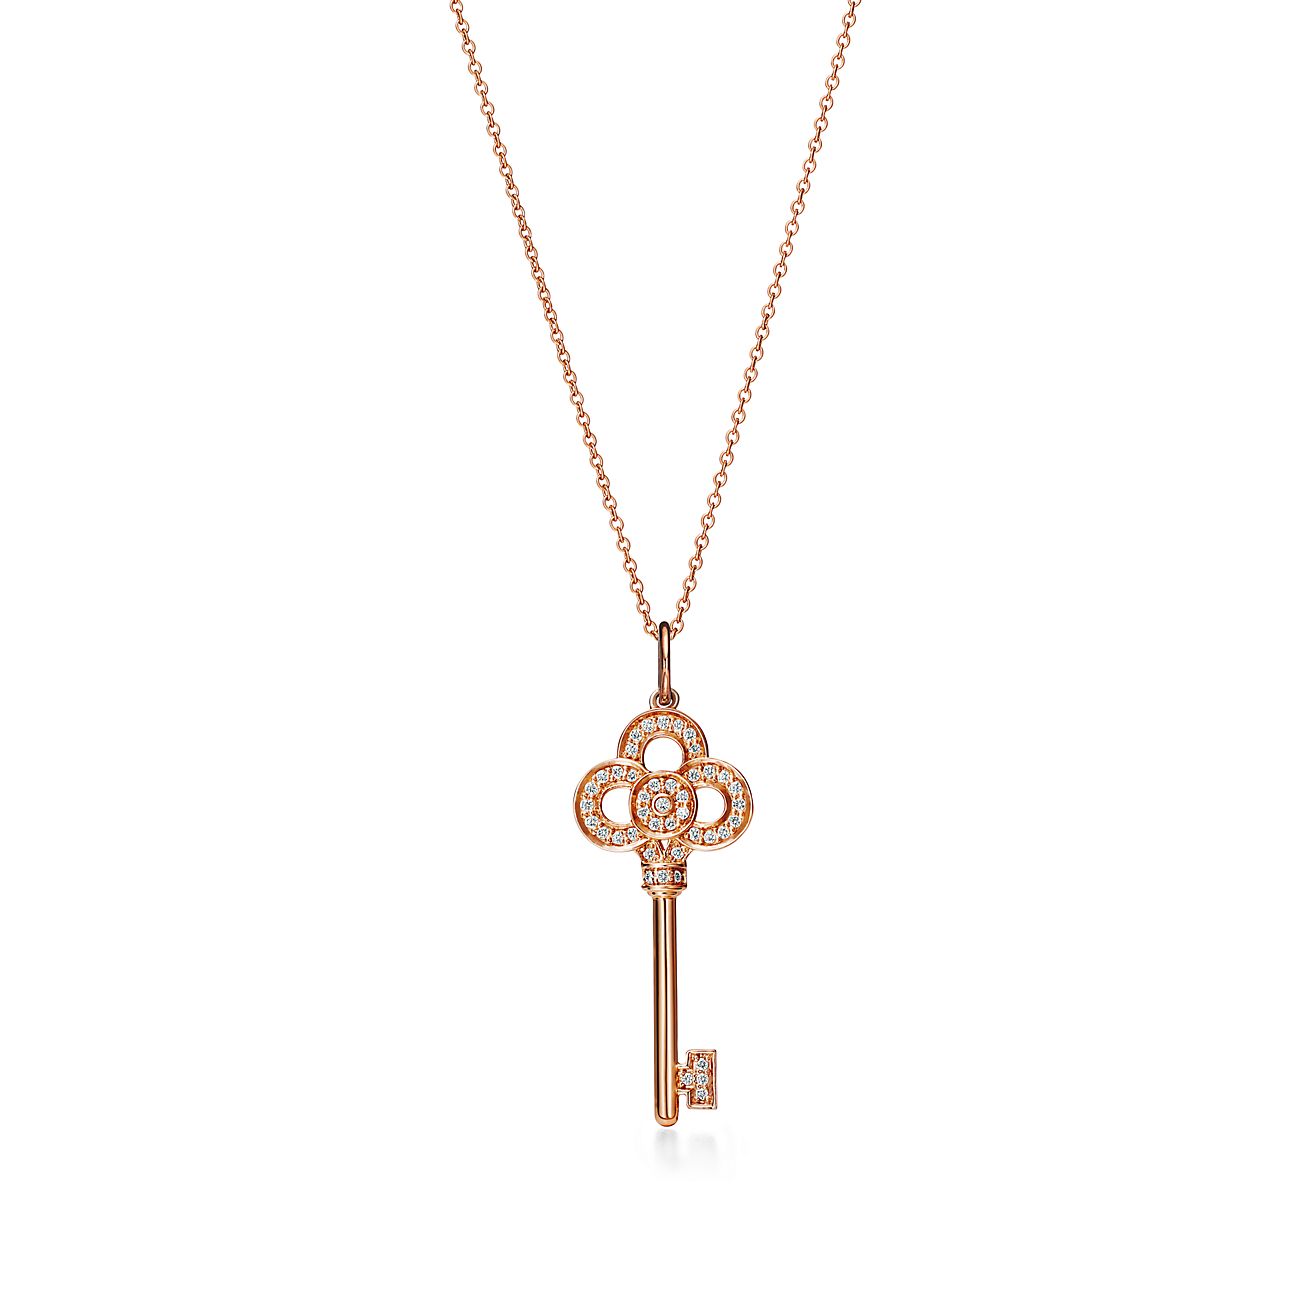 tiffany key pendant gold